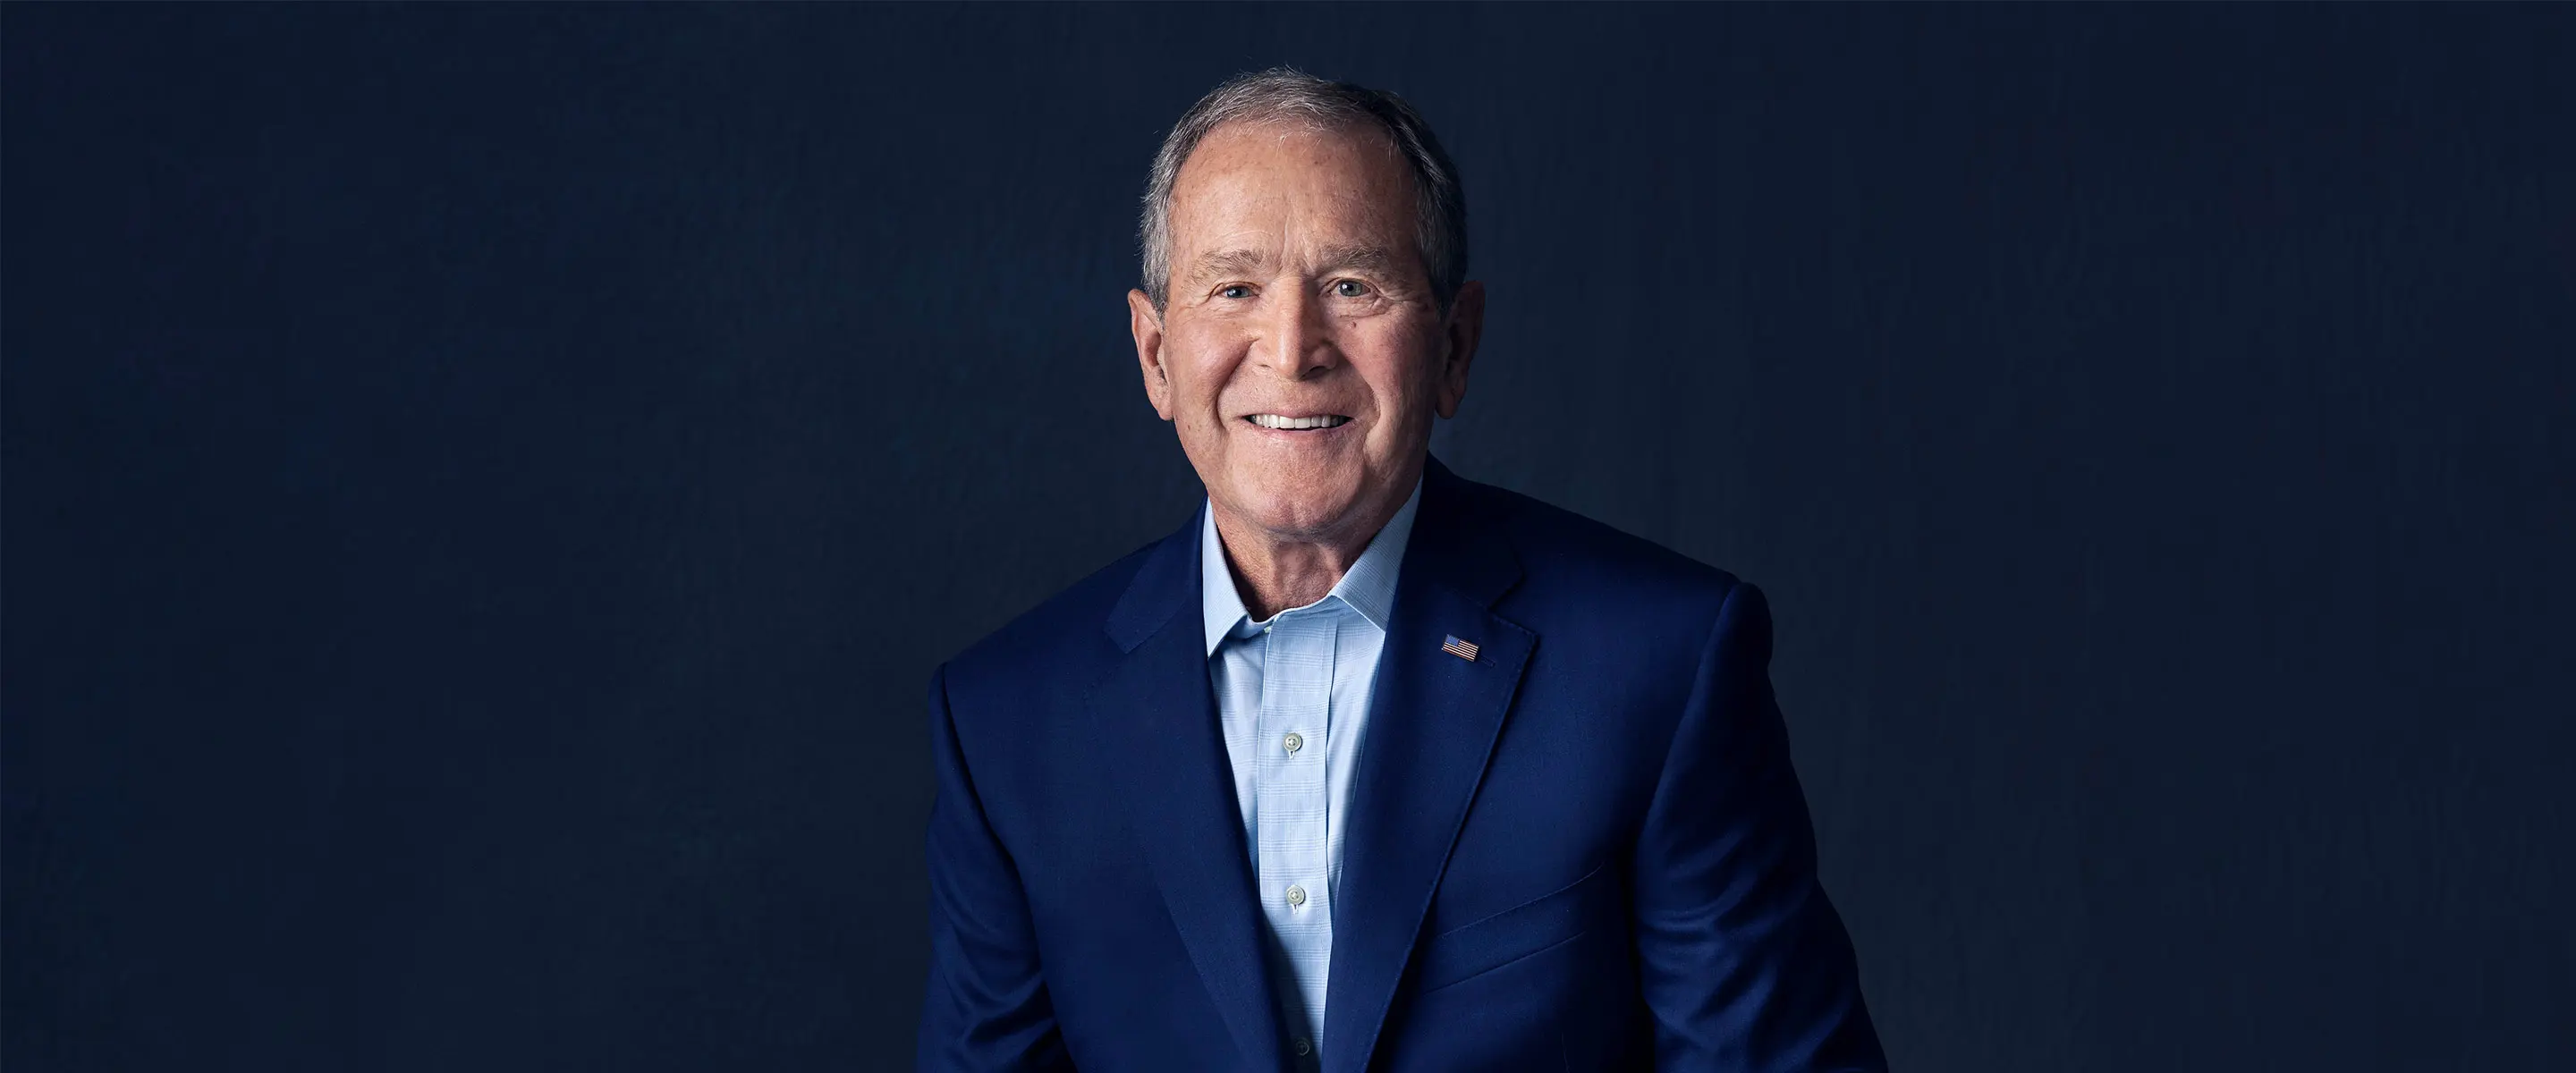 President George W. Bush Teaches Authentic Leadership